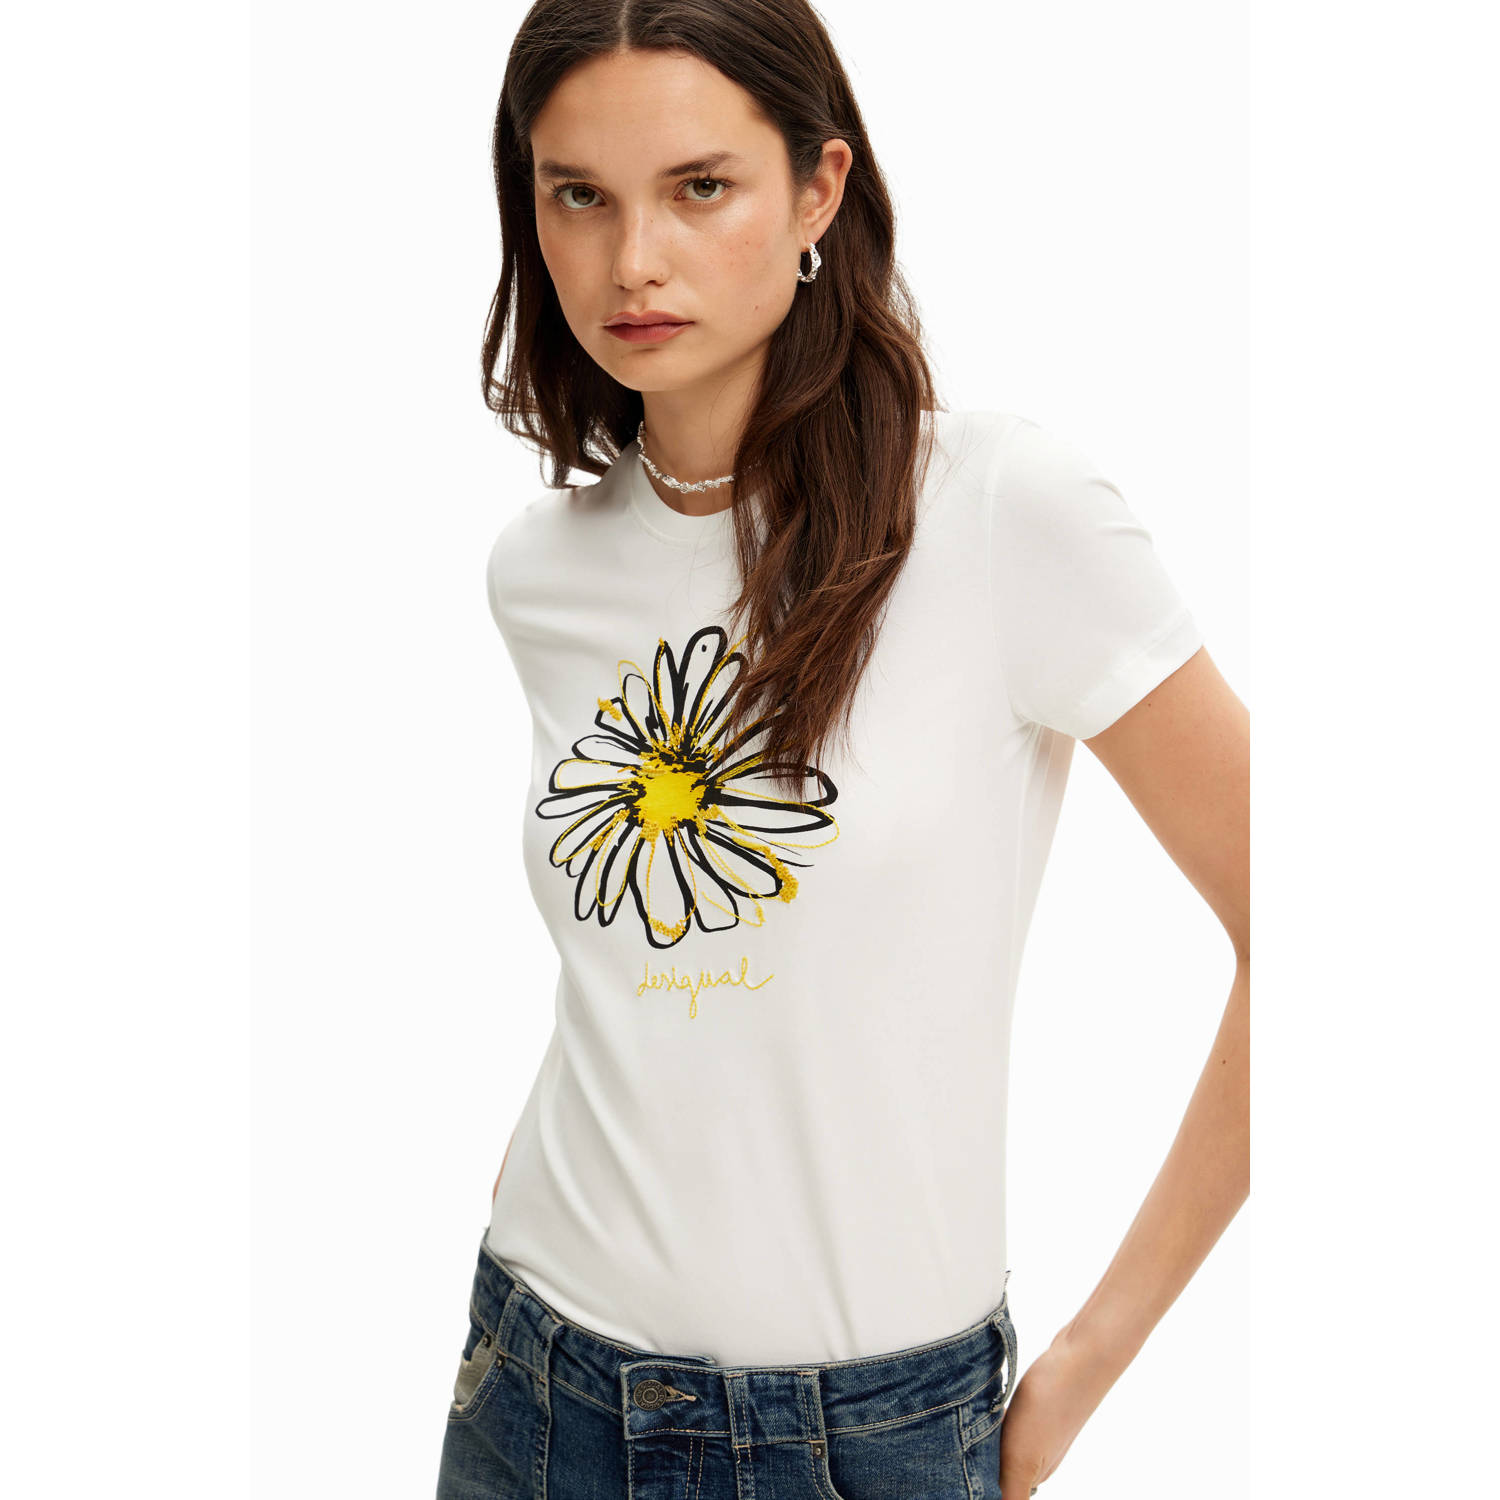 Desigual T-shirt met logo wit geel